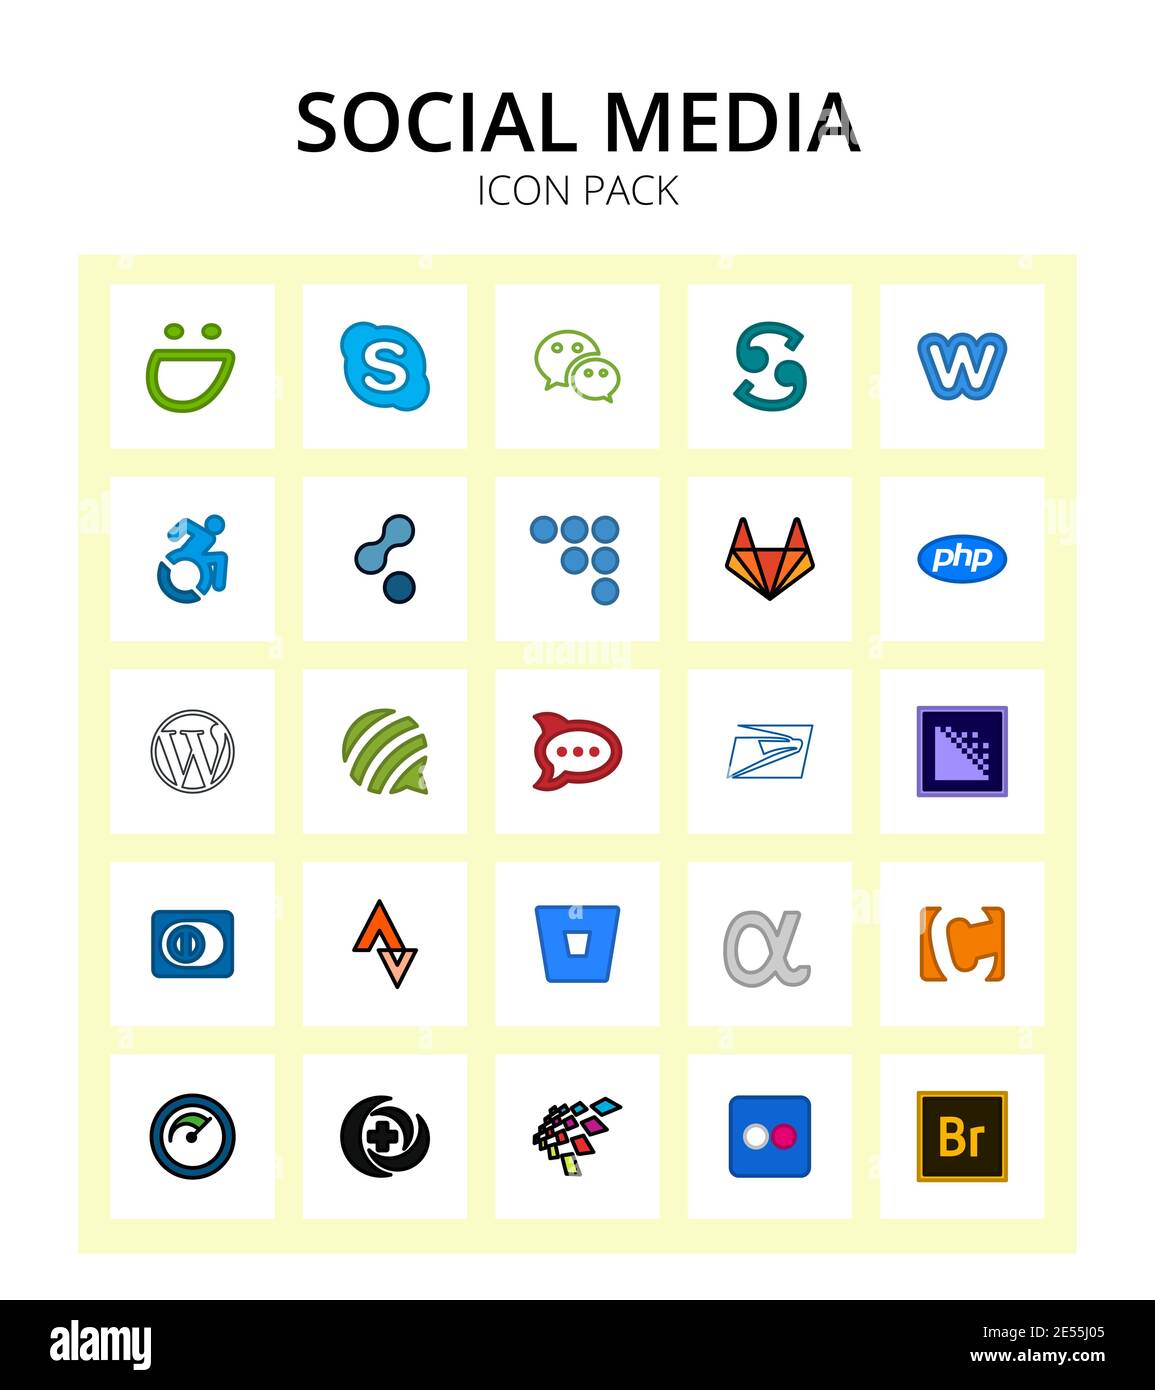 SocialMedia diners, media encoder, coderwall, usps, forumbee Editable Vector Design Elements Stock Vector